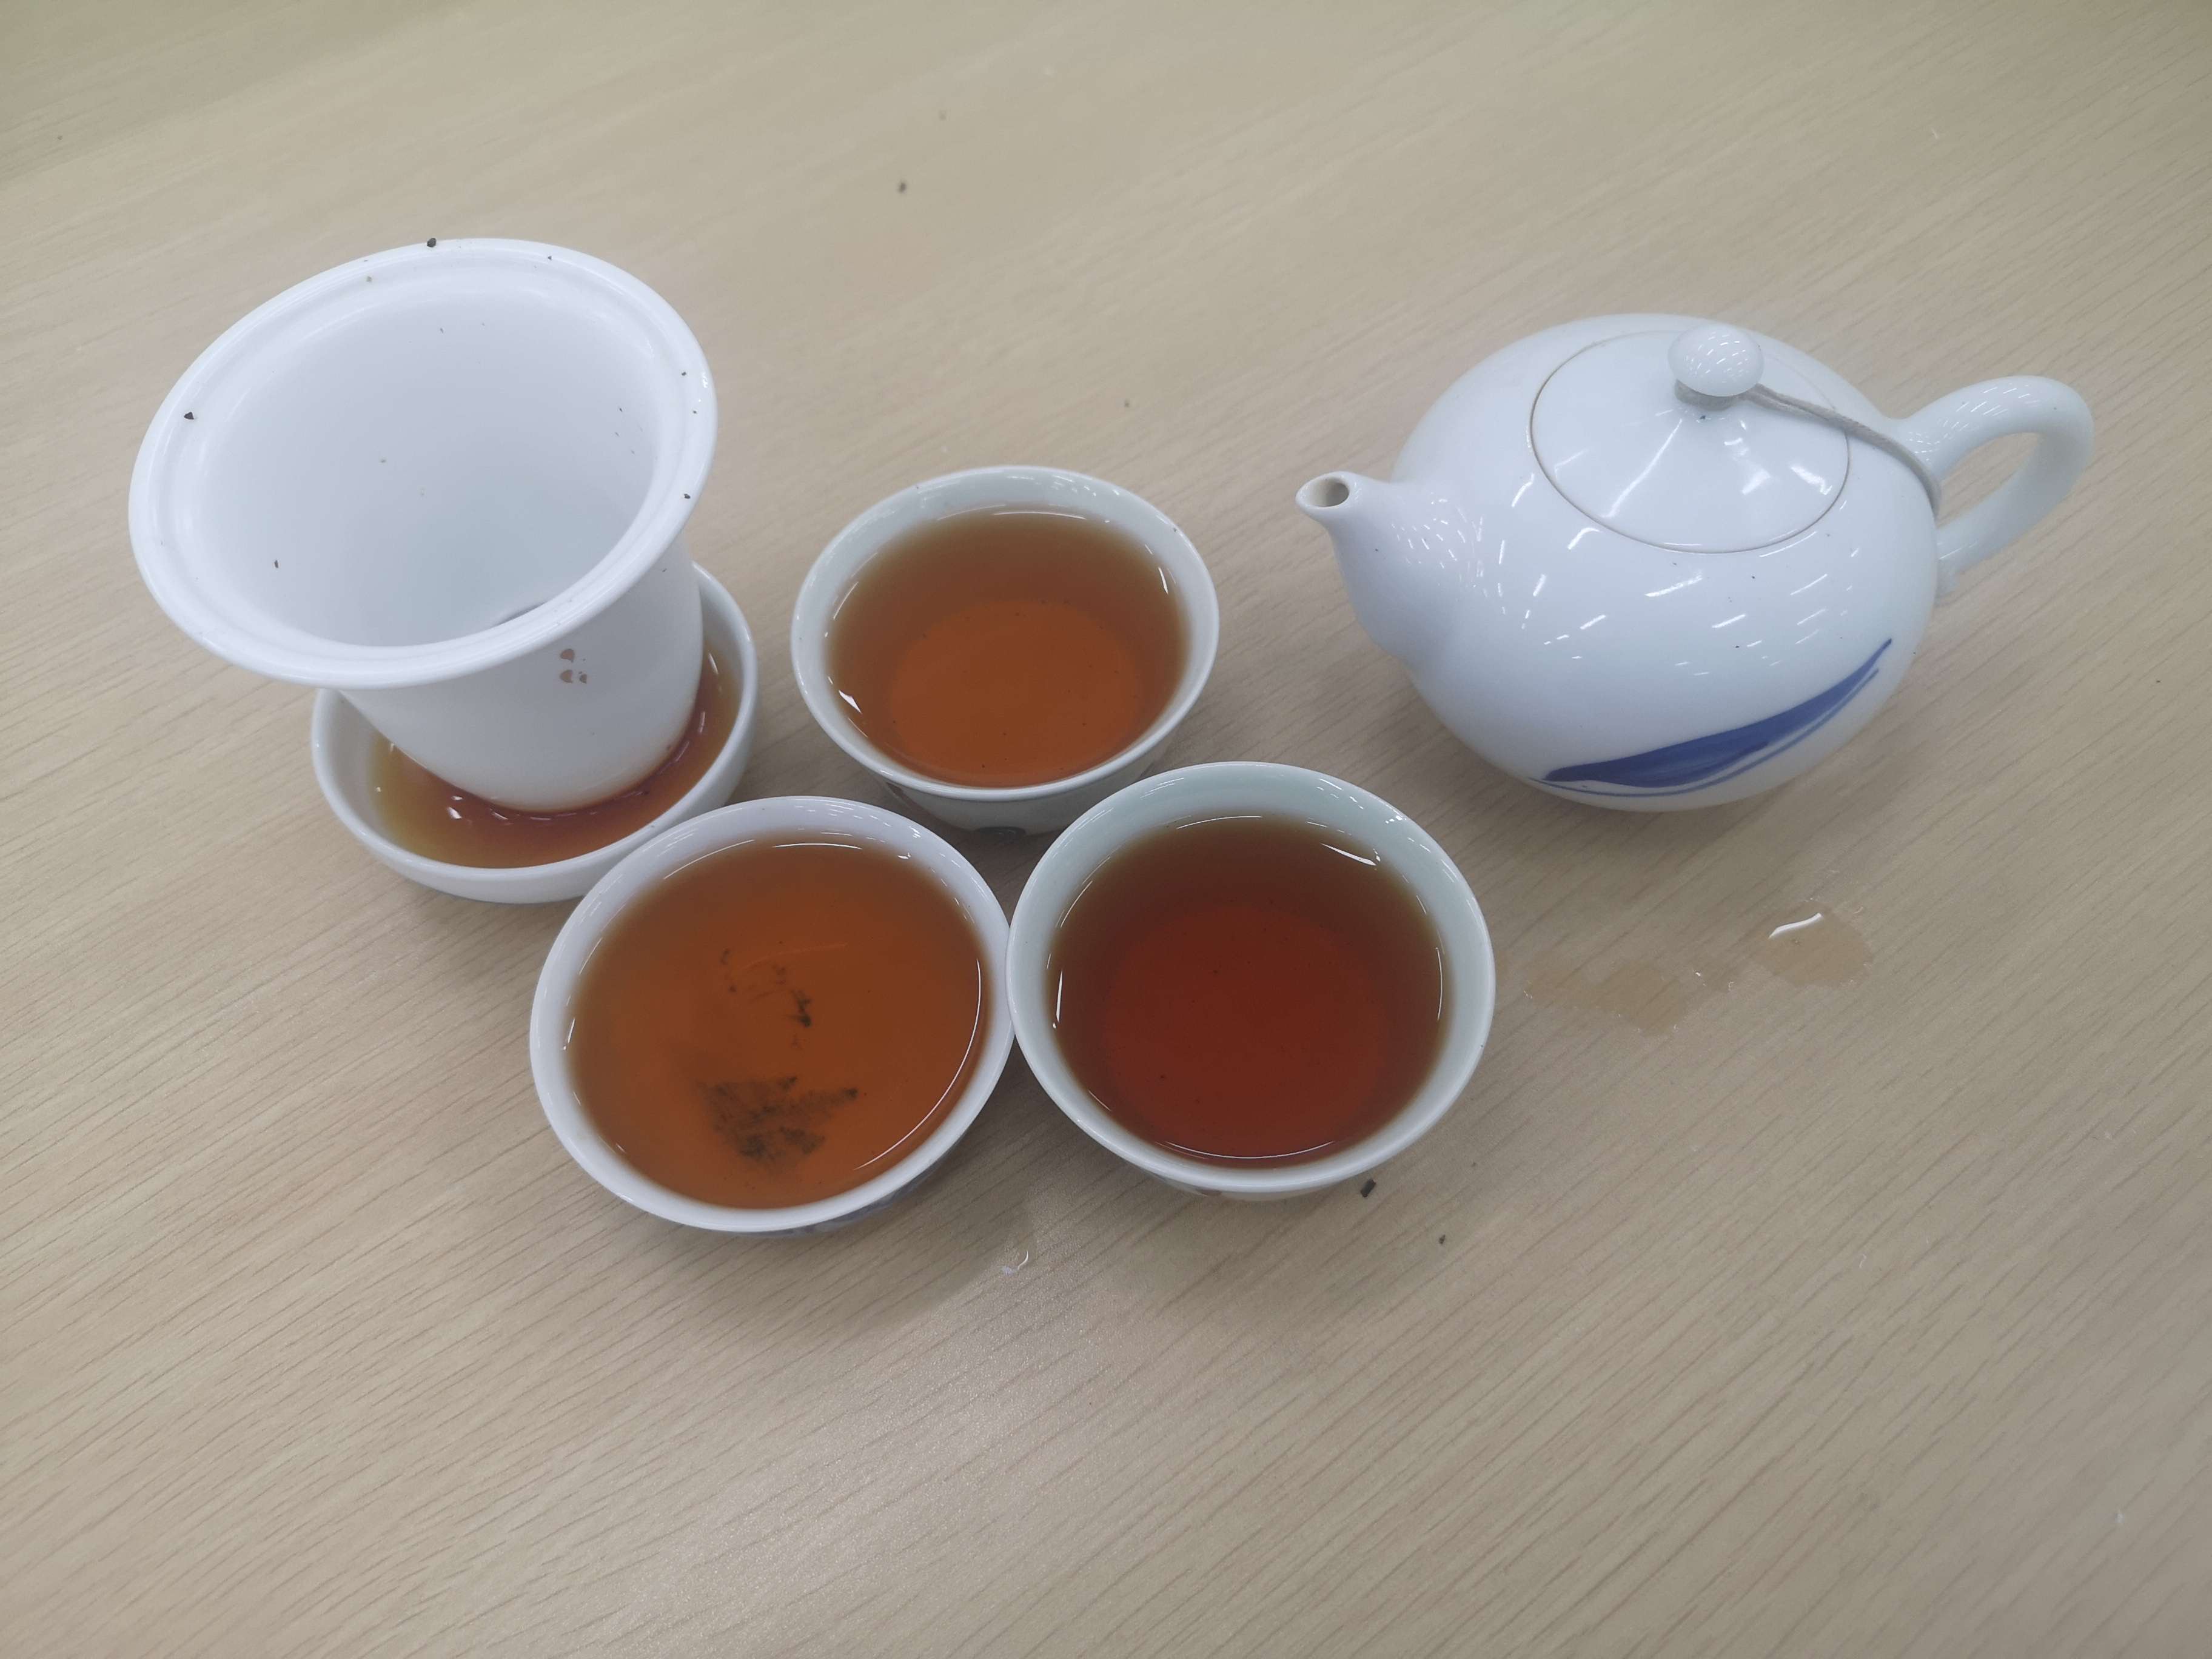 obradovic 的想法: 真正的红茶,不要喝令人昏睡的假红茶! 